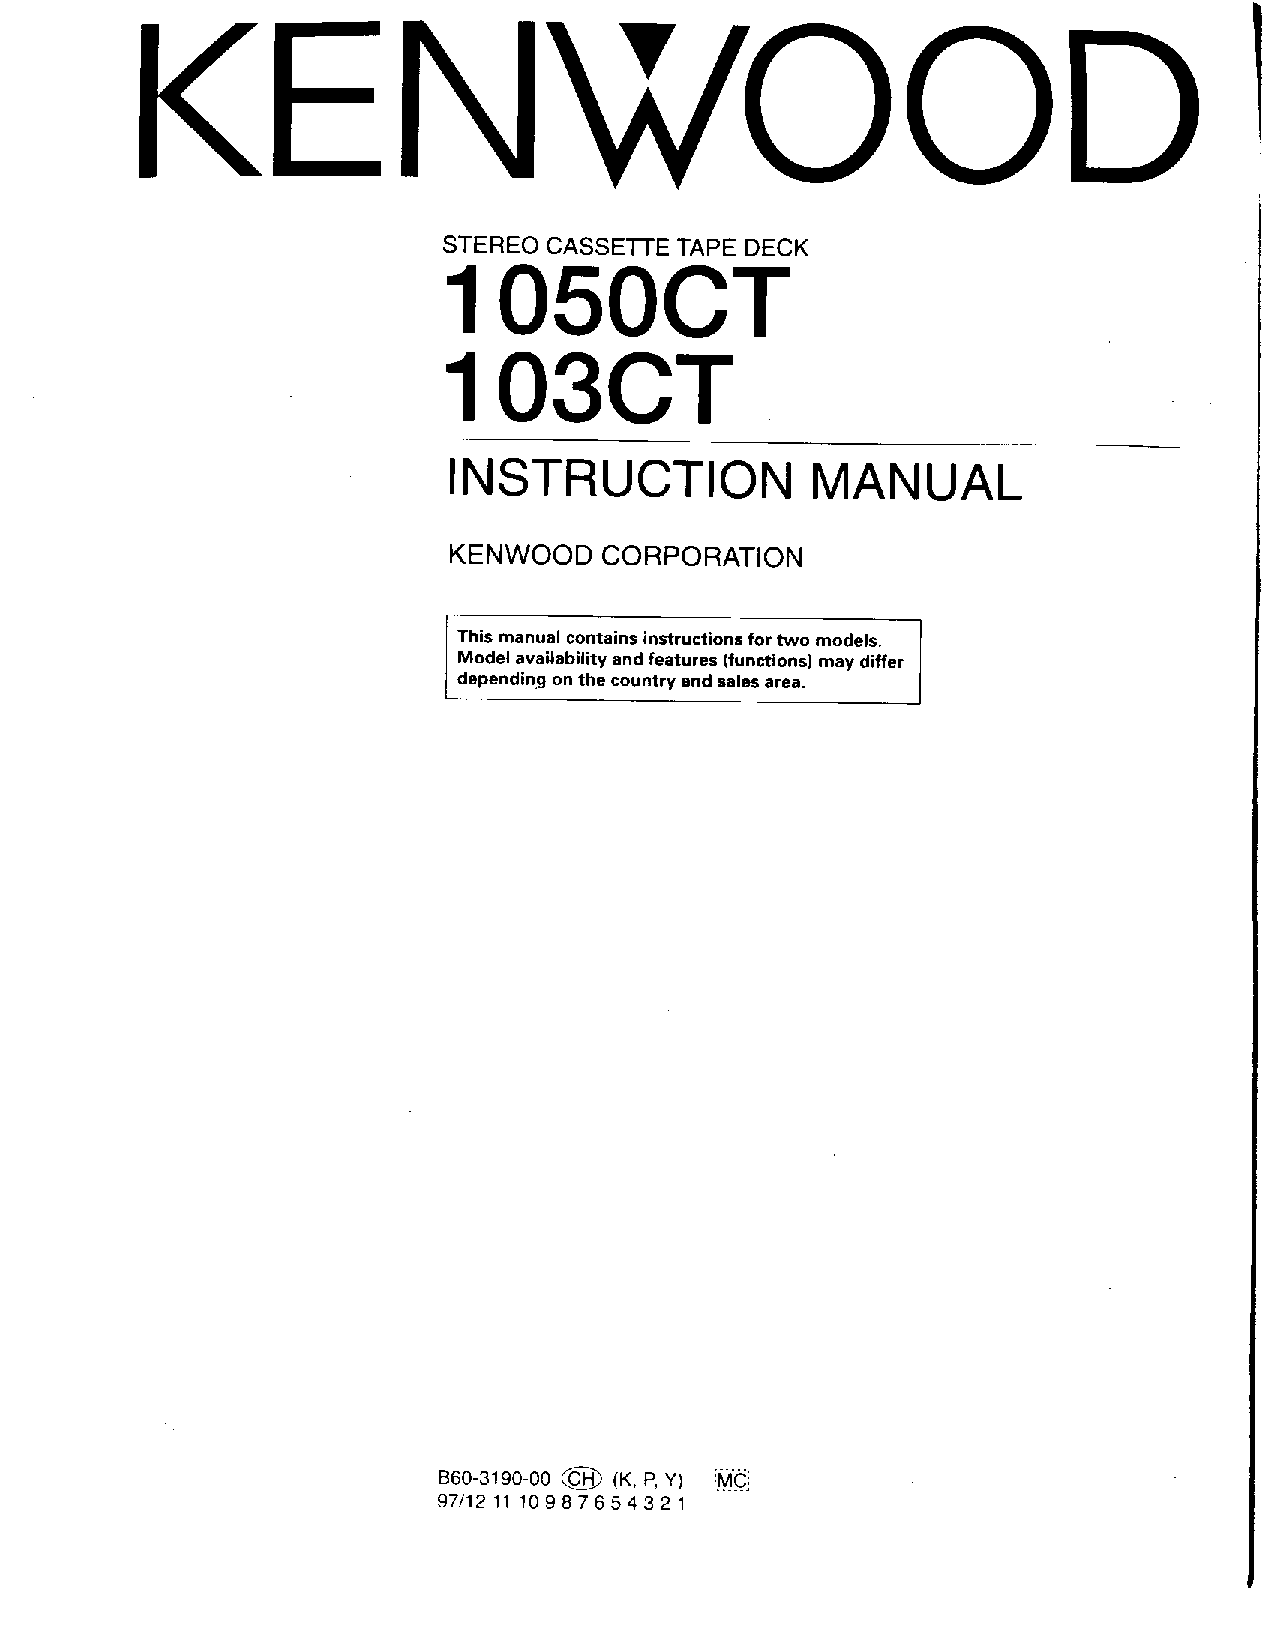 Kenwood 103CT, 1050CT Instruction Manual